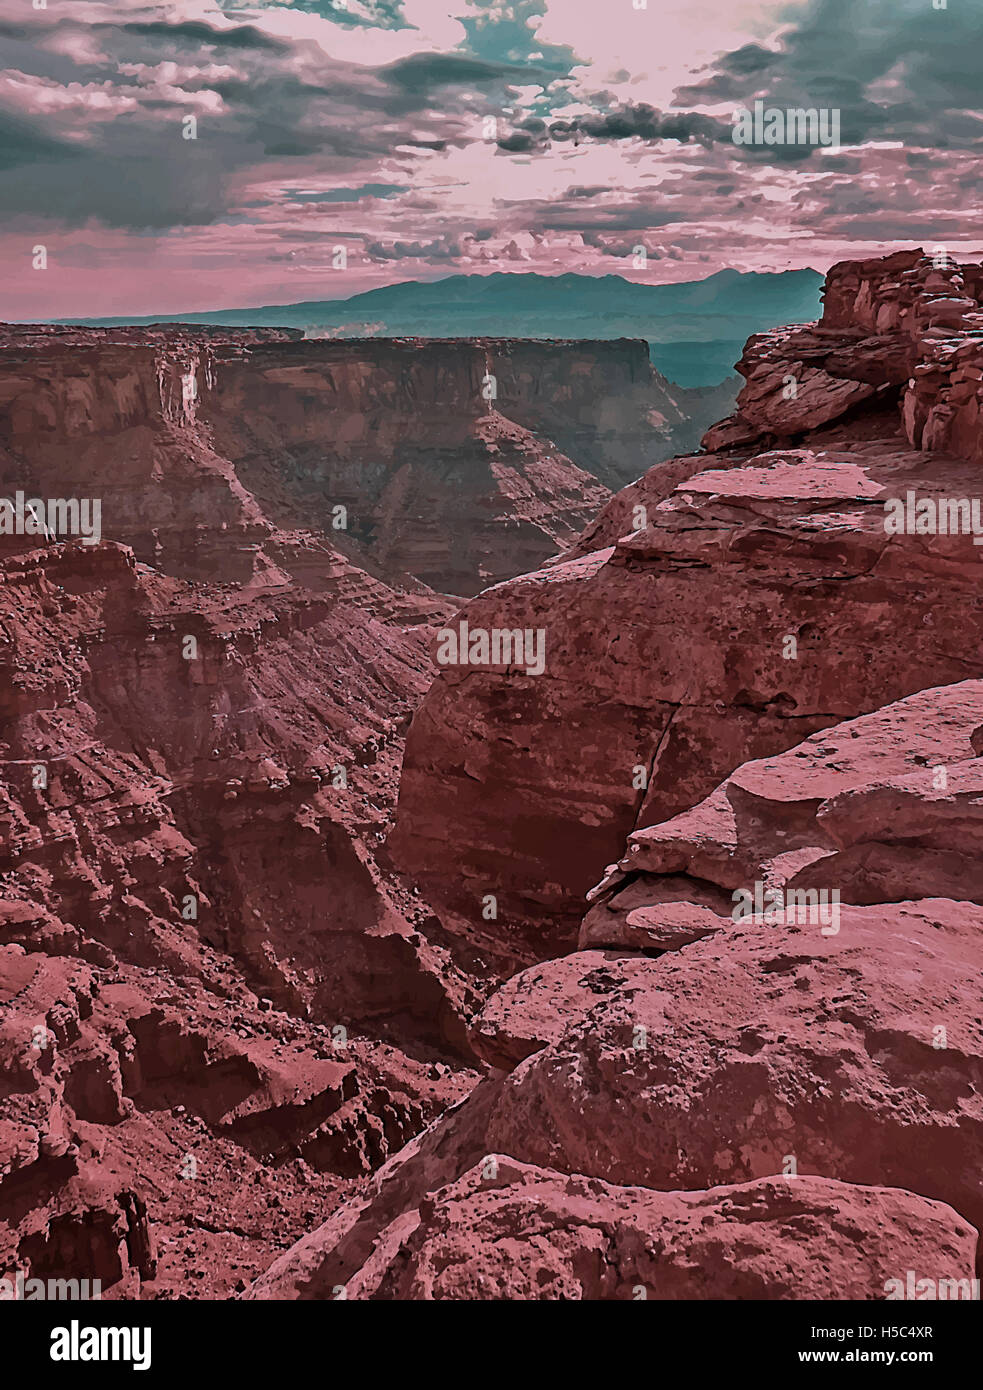 Eerie Canyon Scenery View of the Grand Canyon, US, Arizona. Fotografia regolata digitalmente. Foto Stock